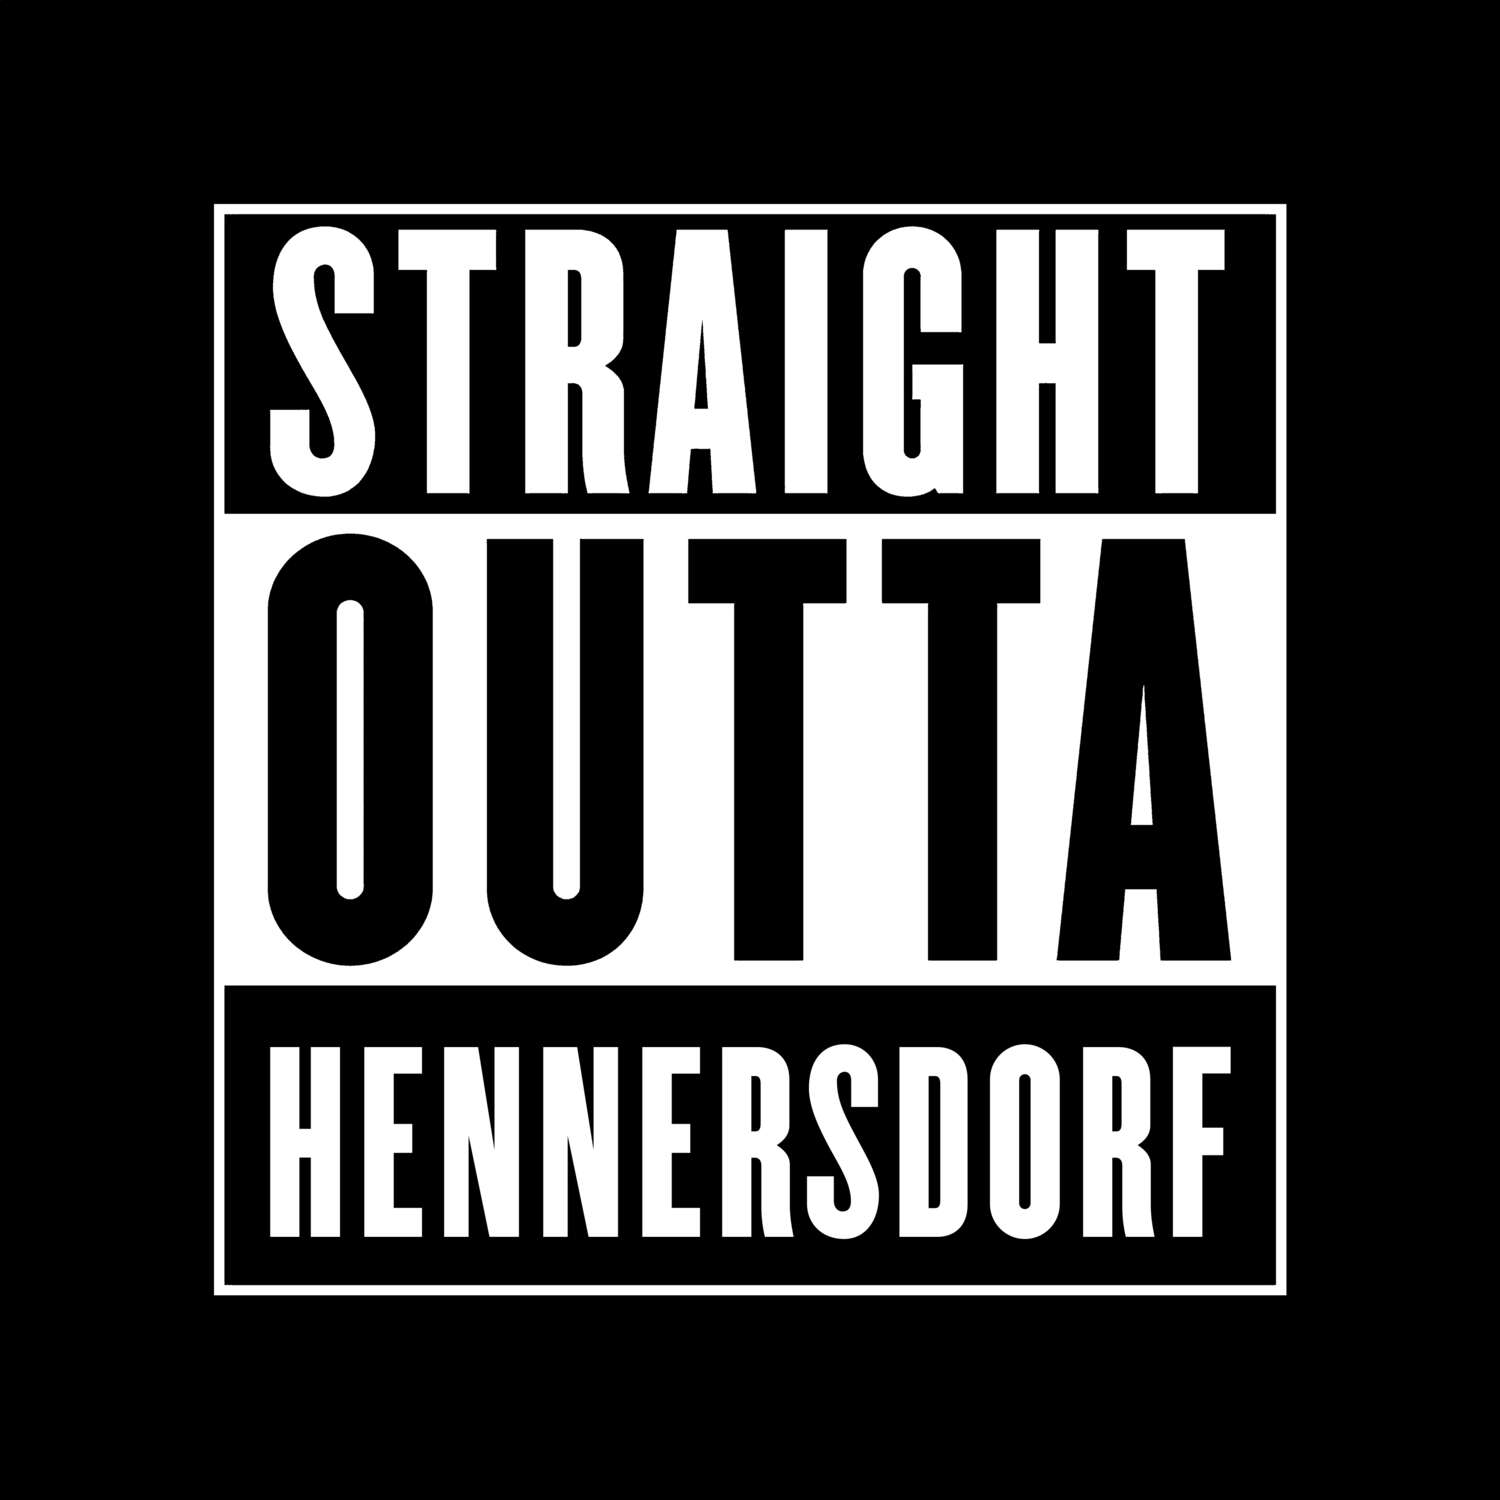 Hennersdorf T-Shirt »Straight Outta«